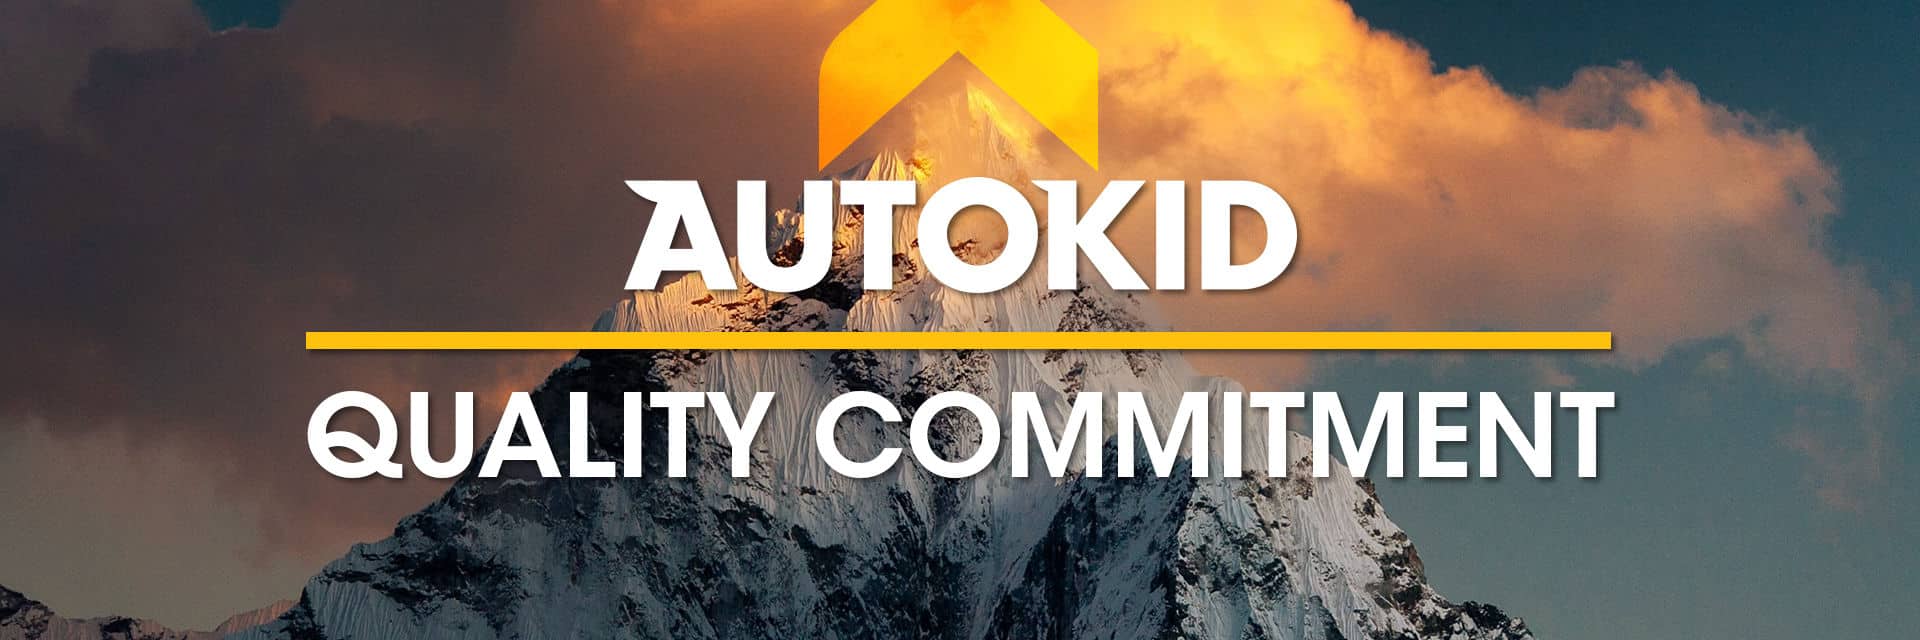 autokid quality commitment mobile